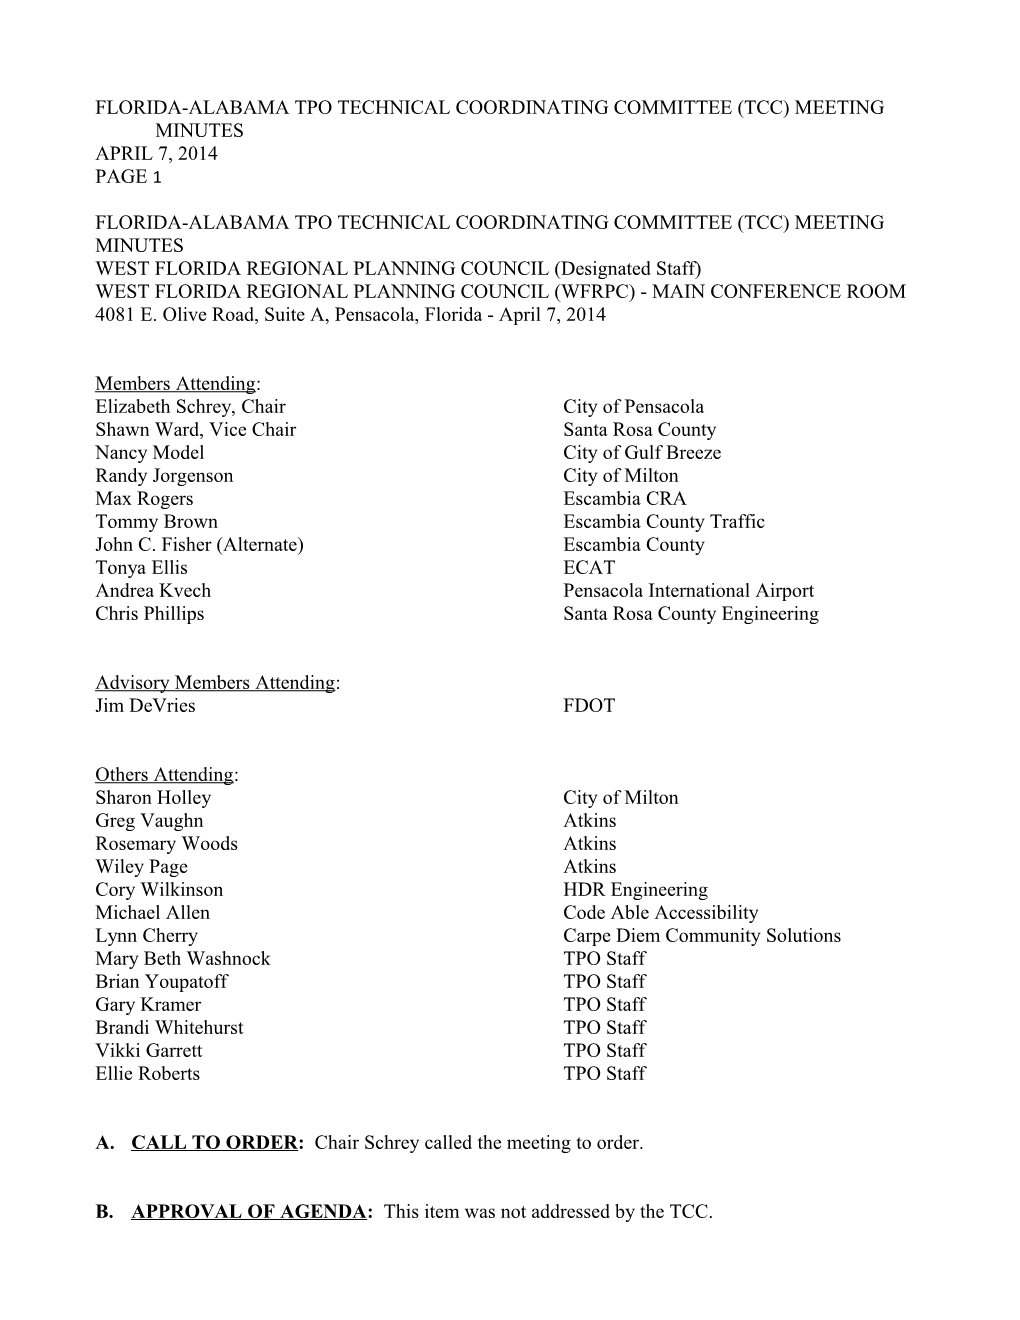 Florida-Alabama Tpo Technical Coordinating Committee (Tcc) Meeting Minutes